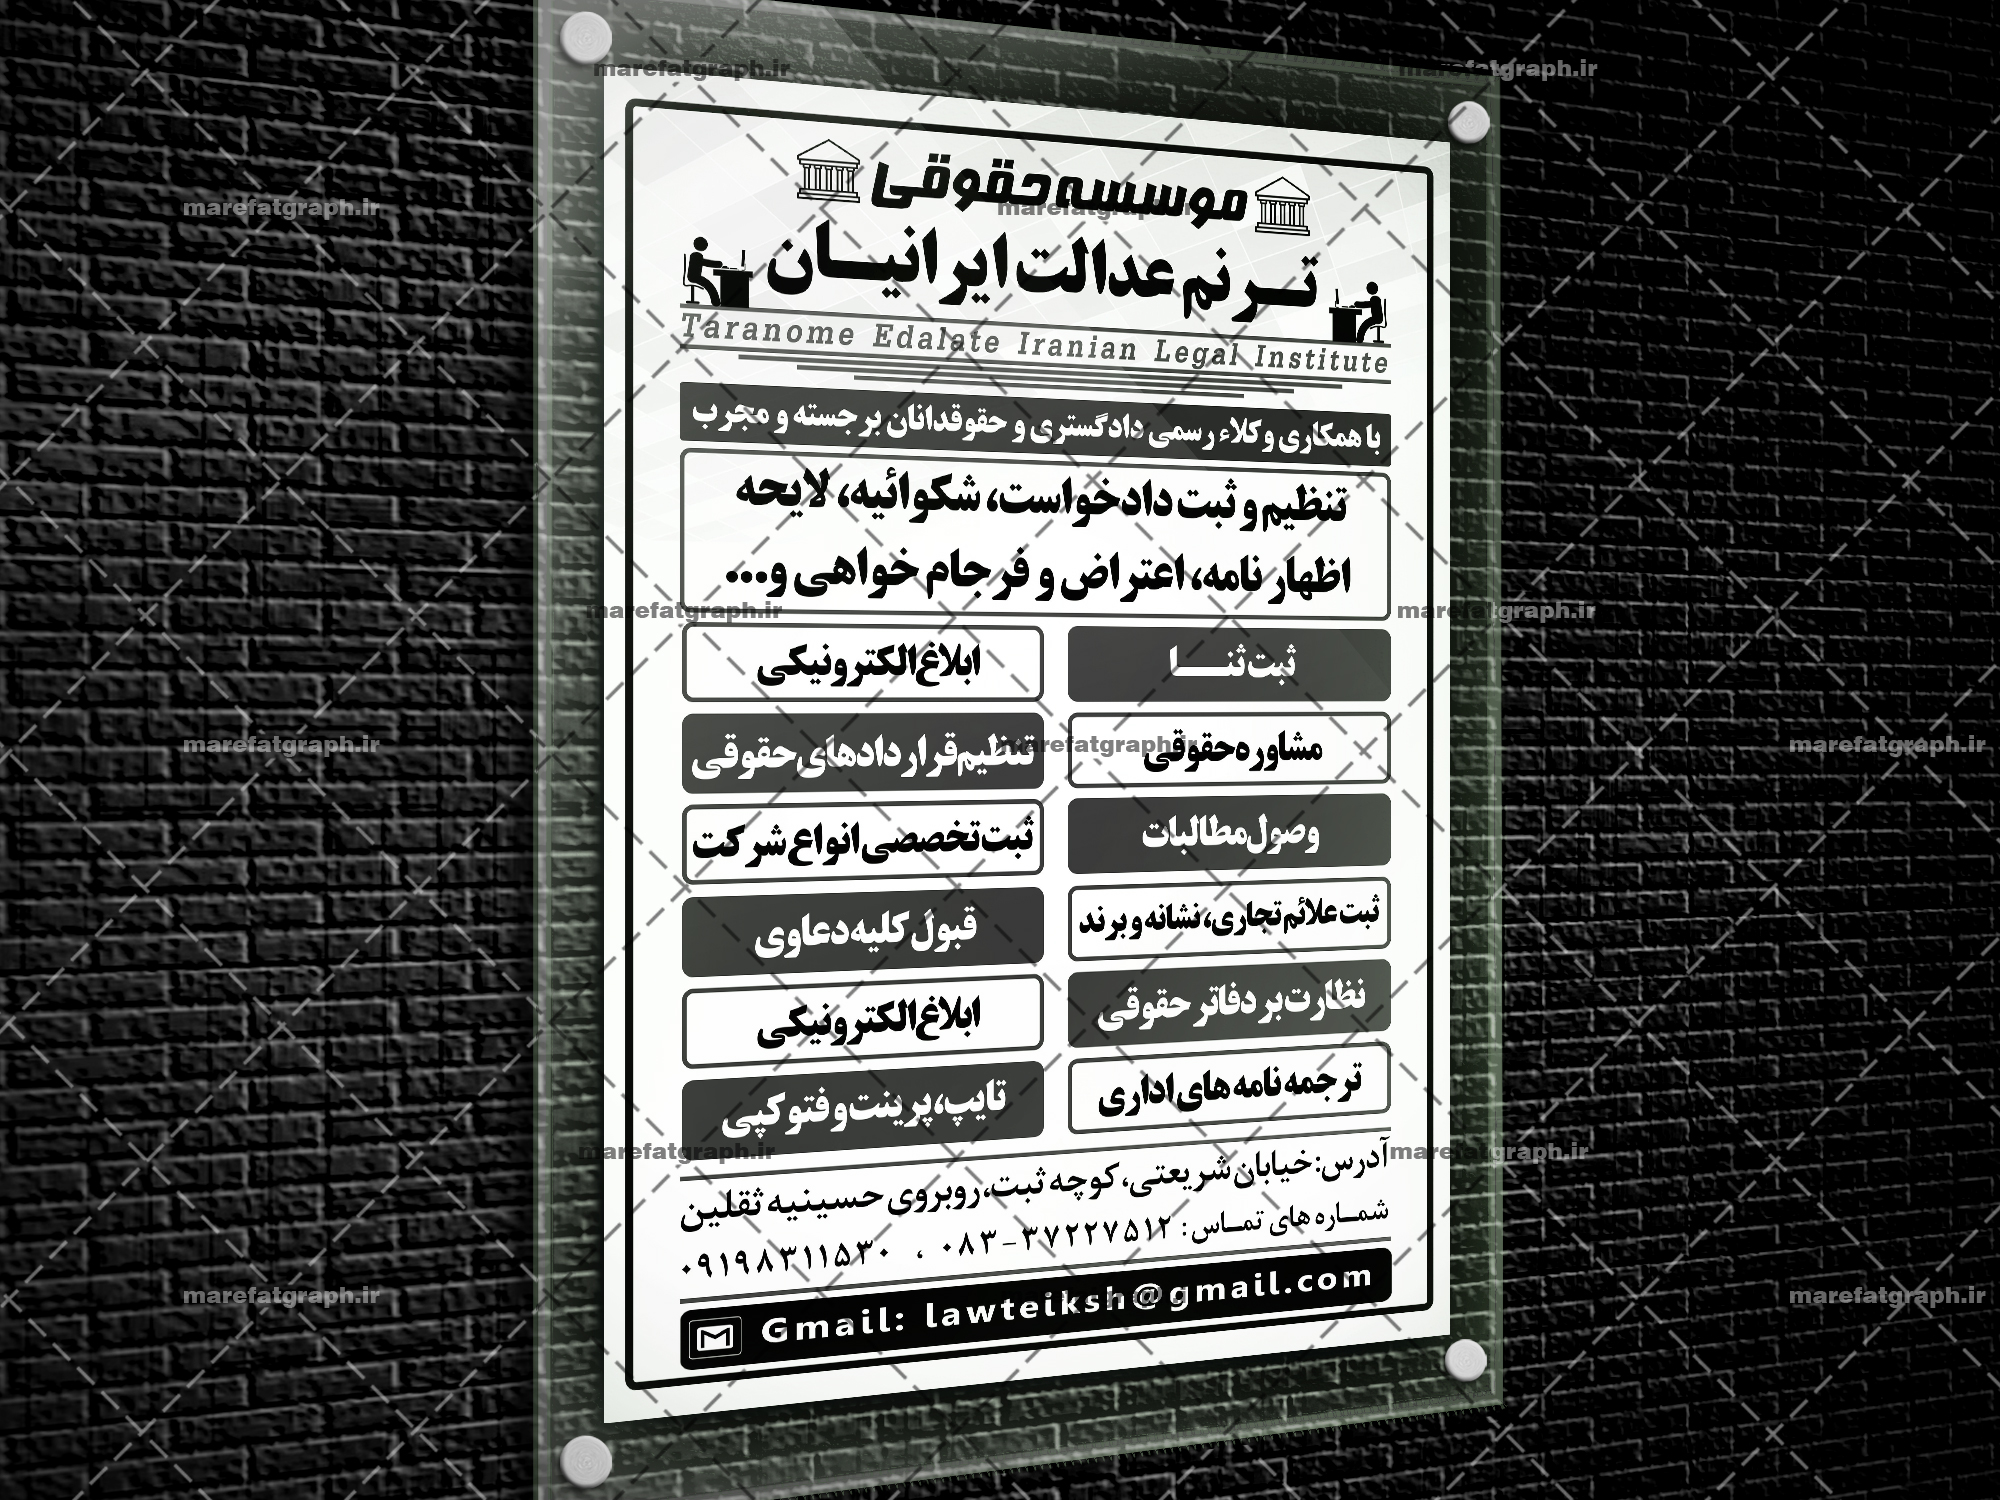 http://bayanbox.ir/view/6518886035183506460/Taranome-Edalate-Iranian-Legal-Institute.jpg